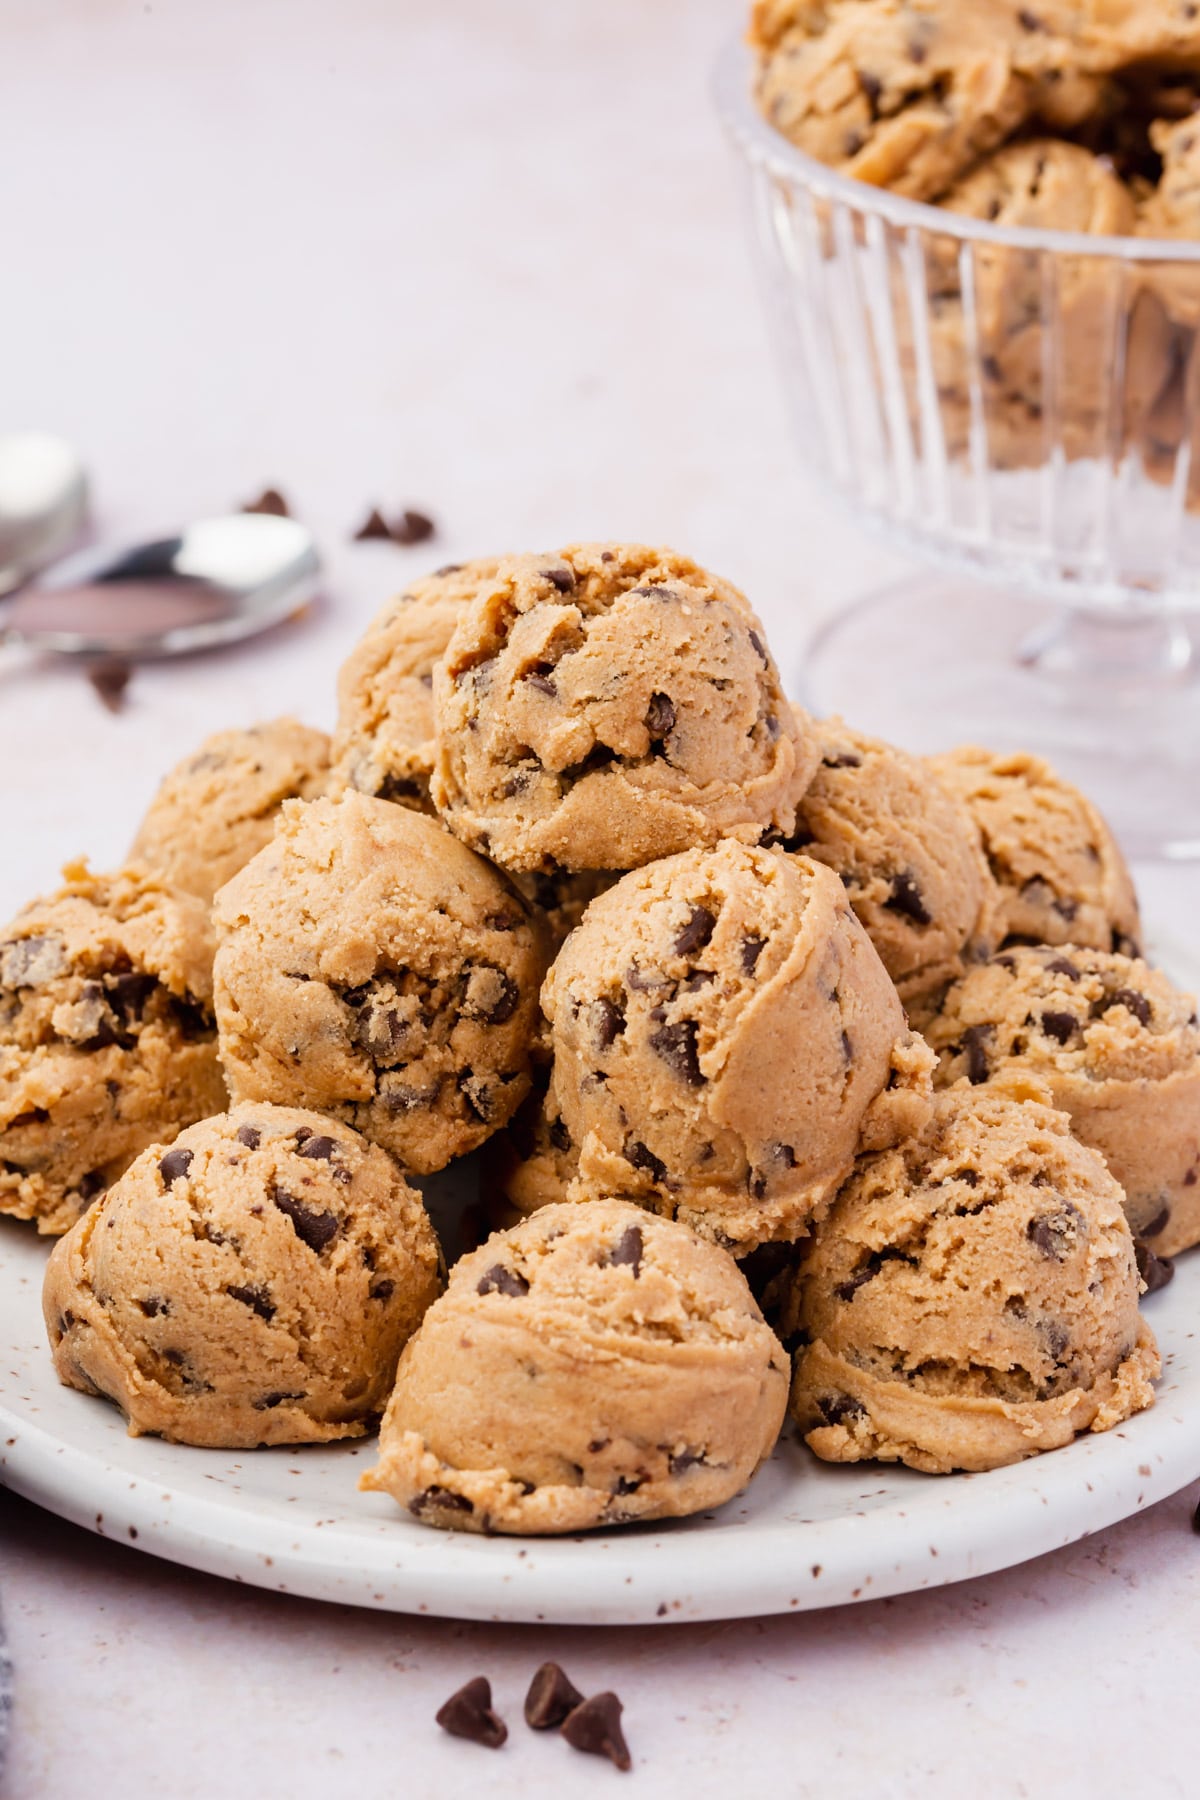 A plate of gluten-free edible cookie dough balls.